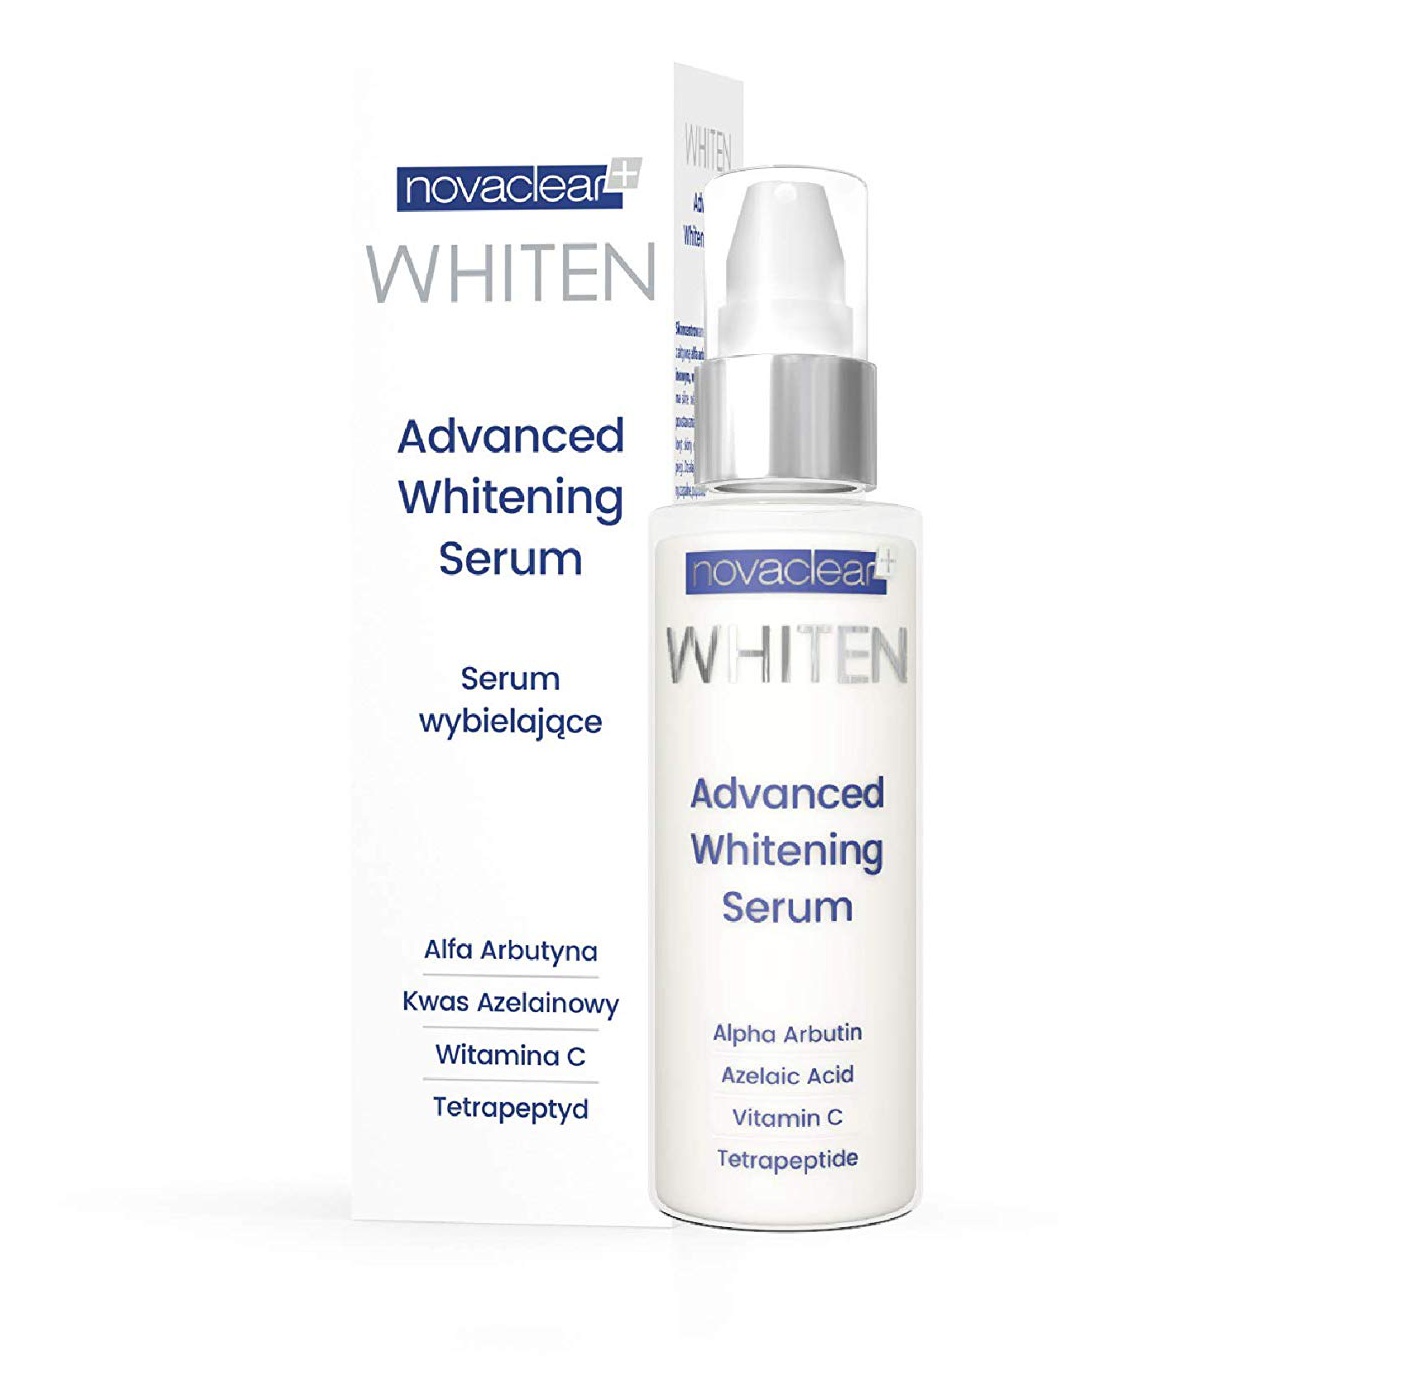 Novaclear Whiten Advanced Whitening Serum